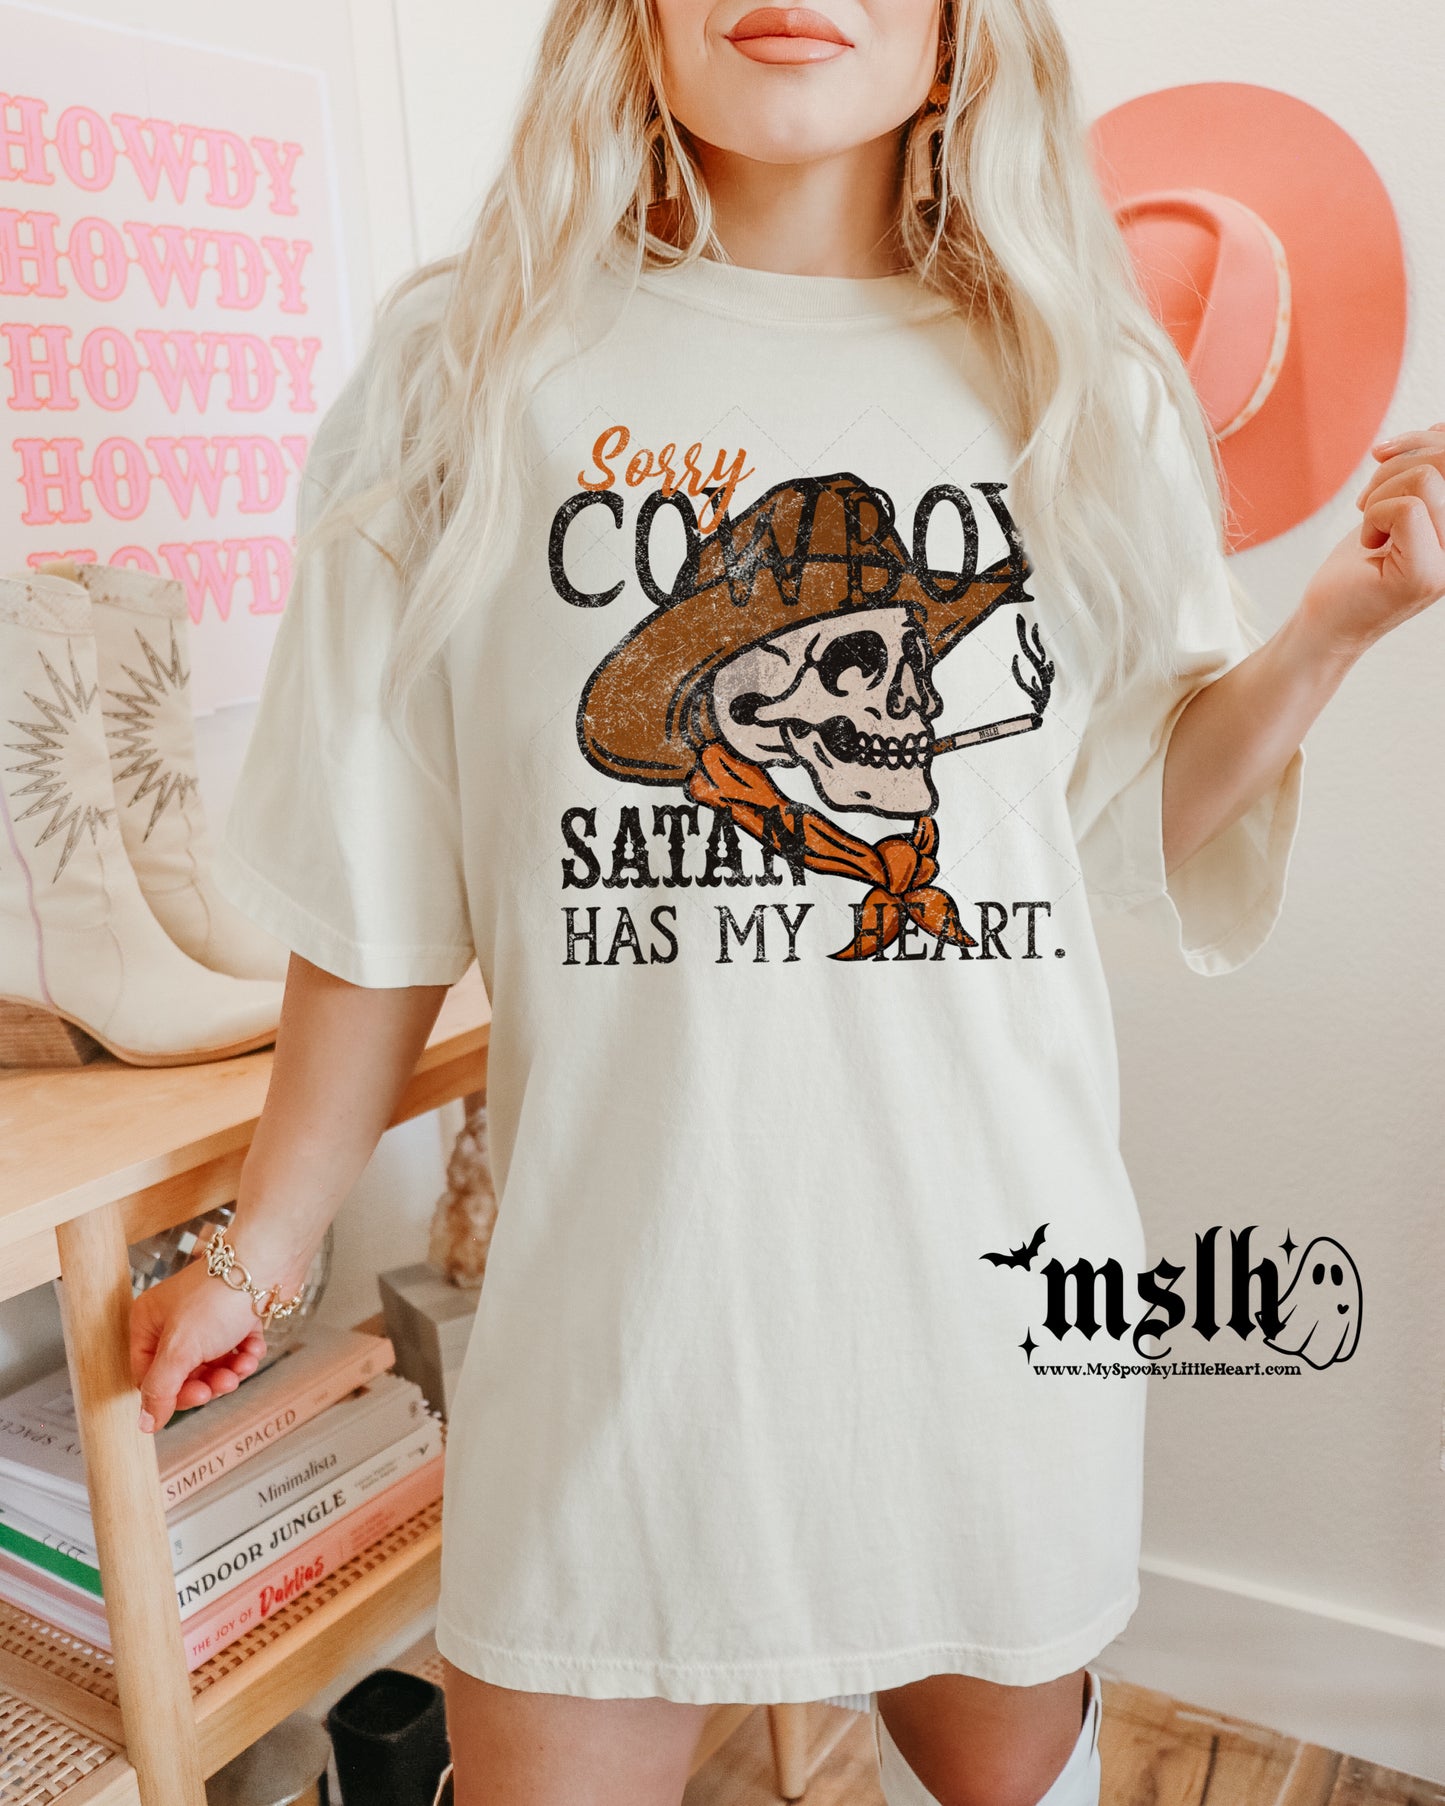 Sorry Cowboy Satan has my Heart T-Shirt